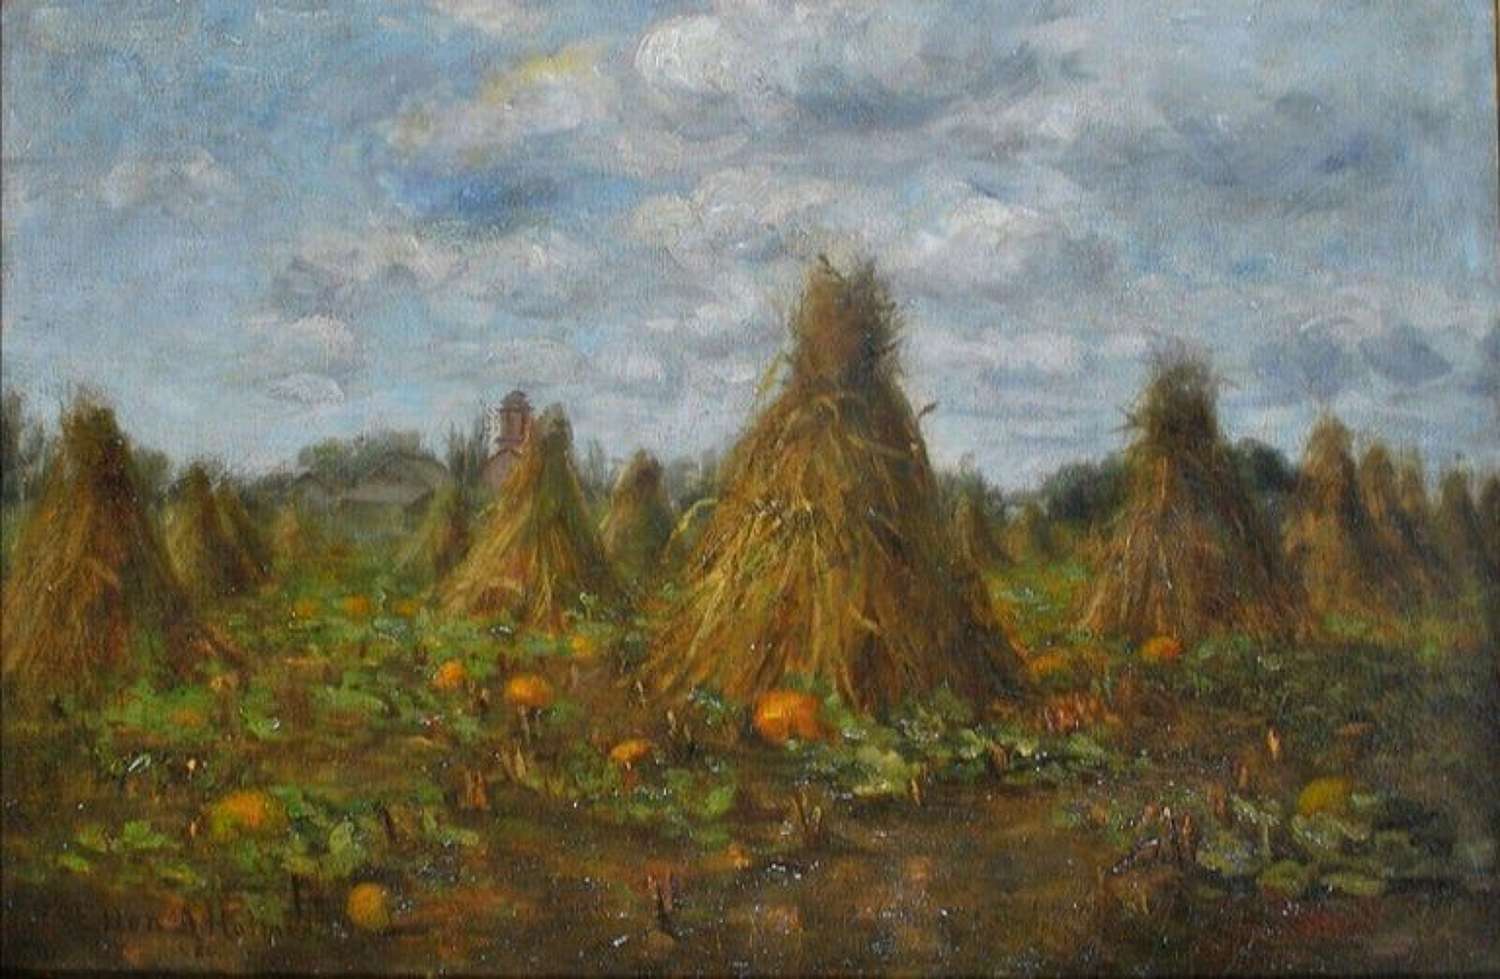 Ellen Angeline Holmes (1852-1933) Hay Stacks & Pumpkins, Oil on Canvas